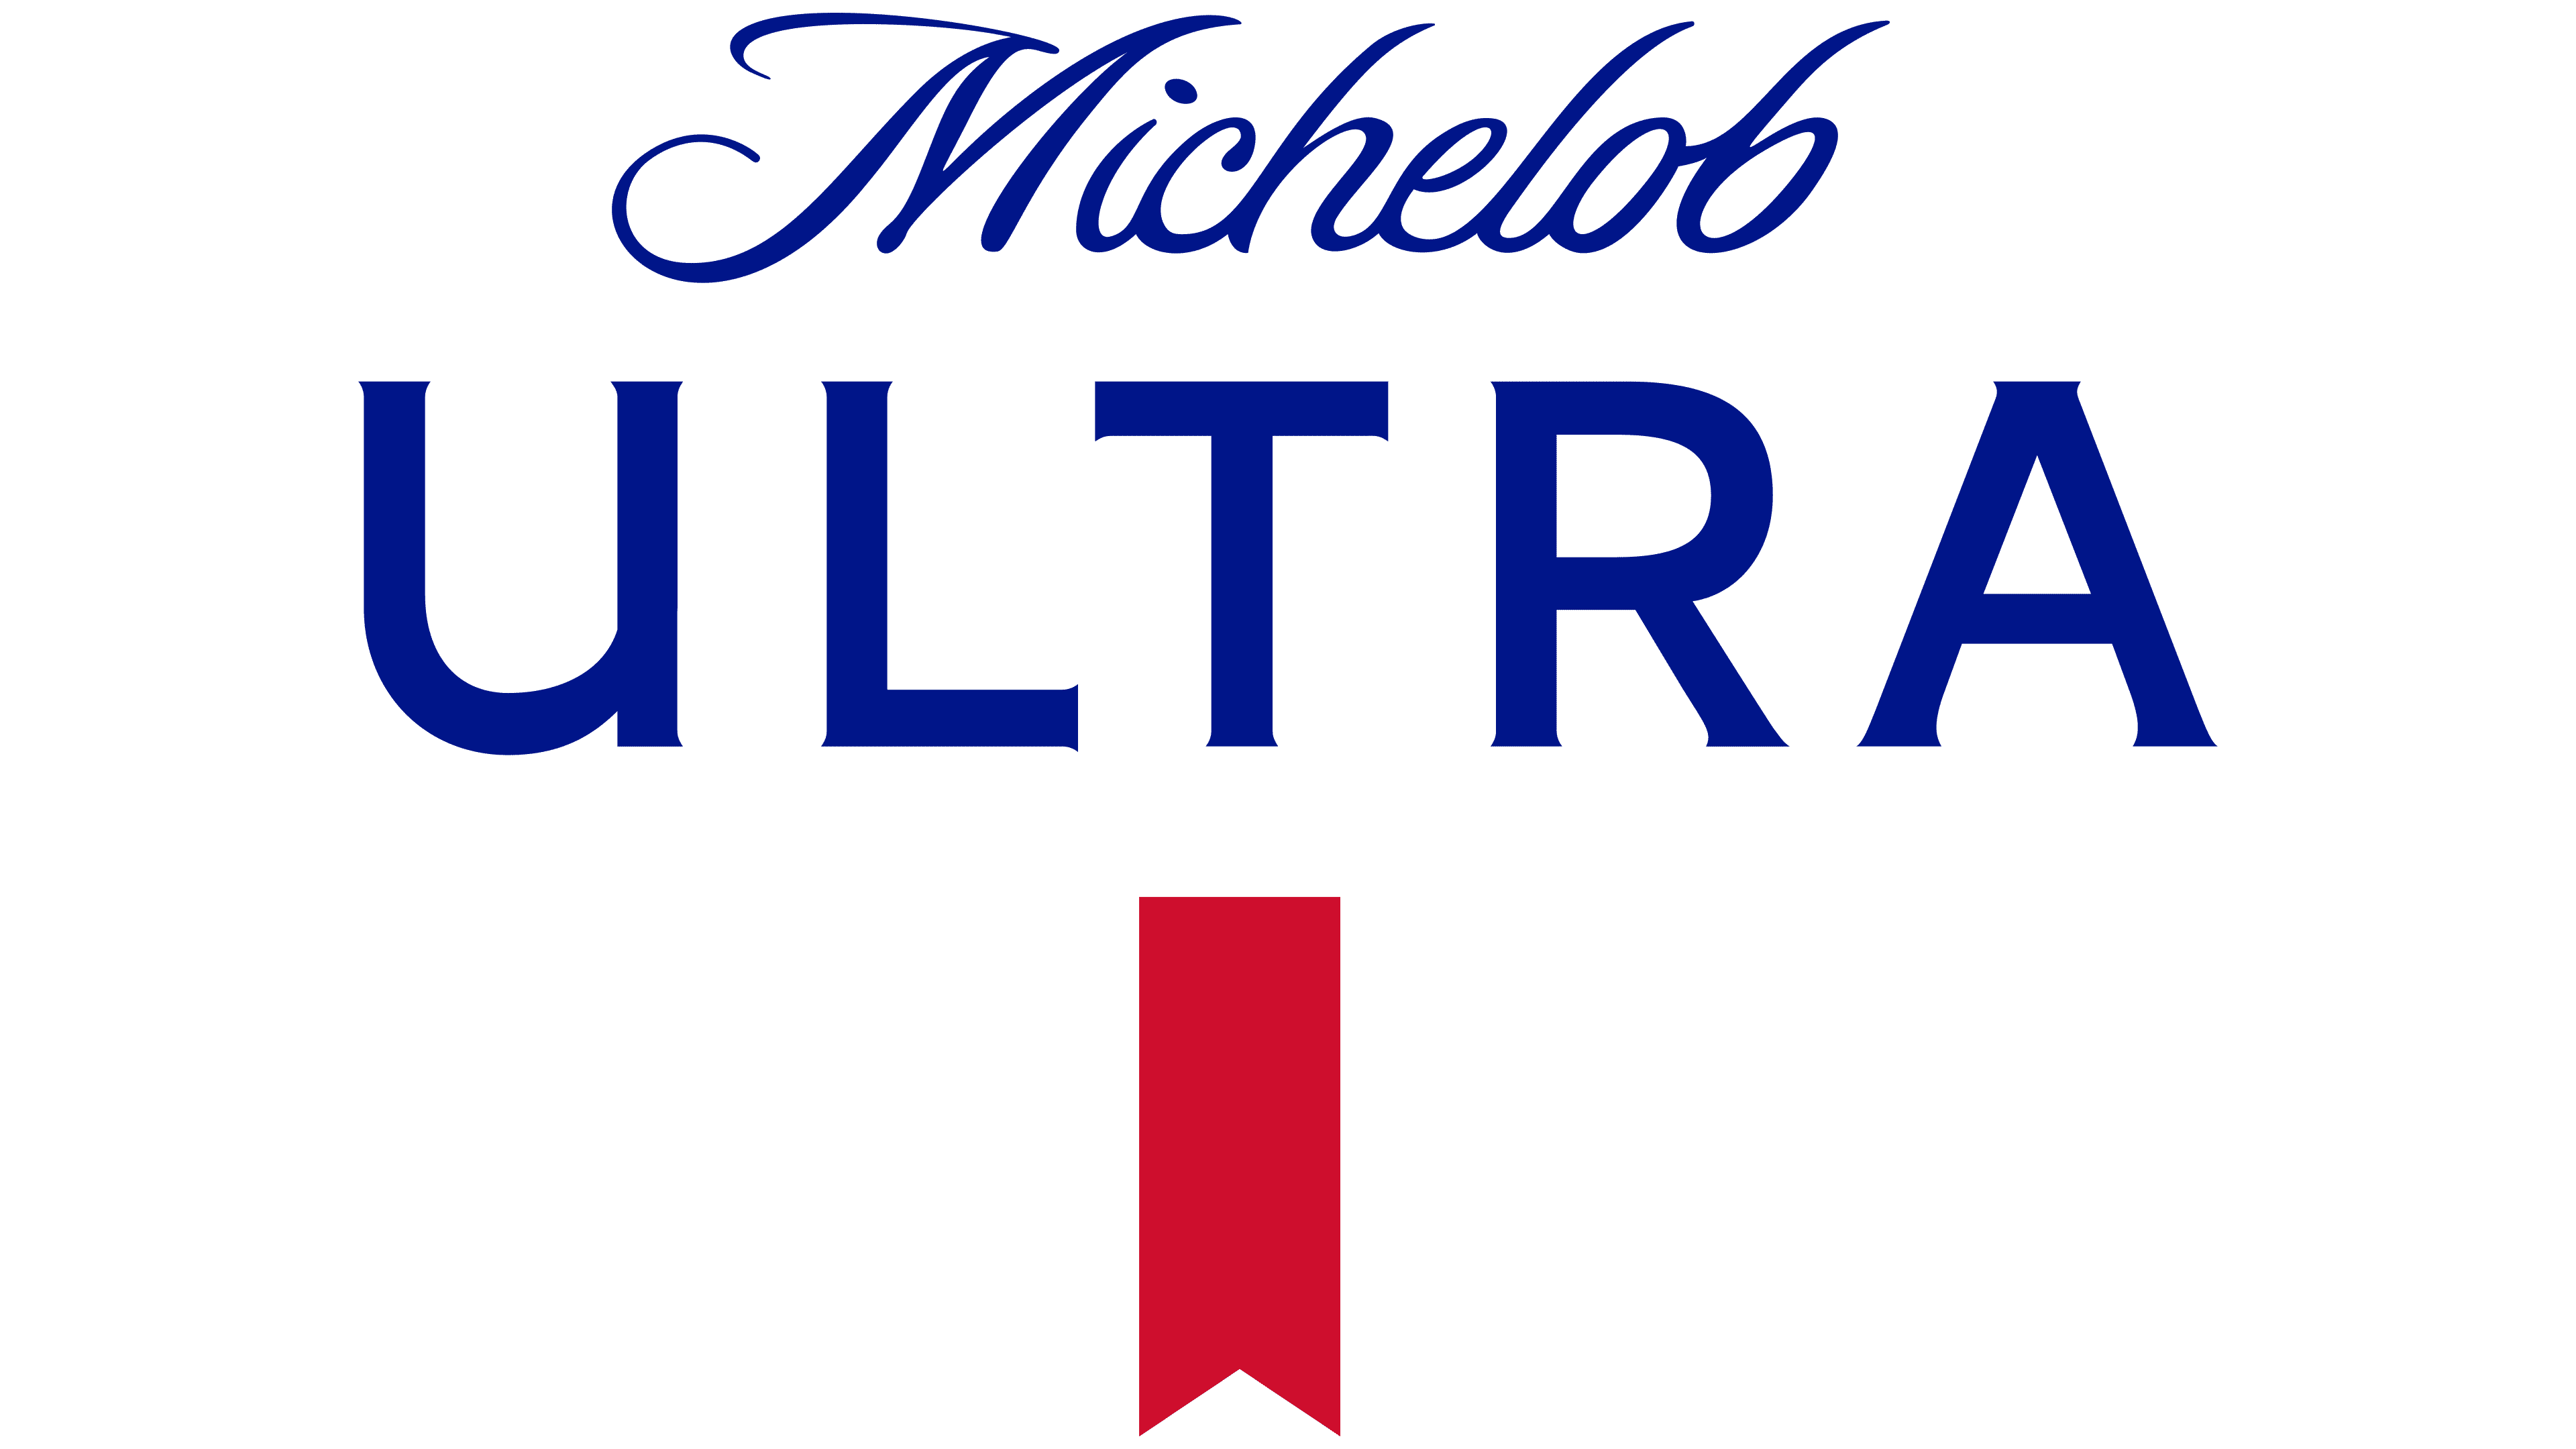 Michelob ULTRA